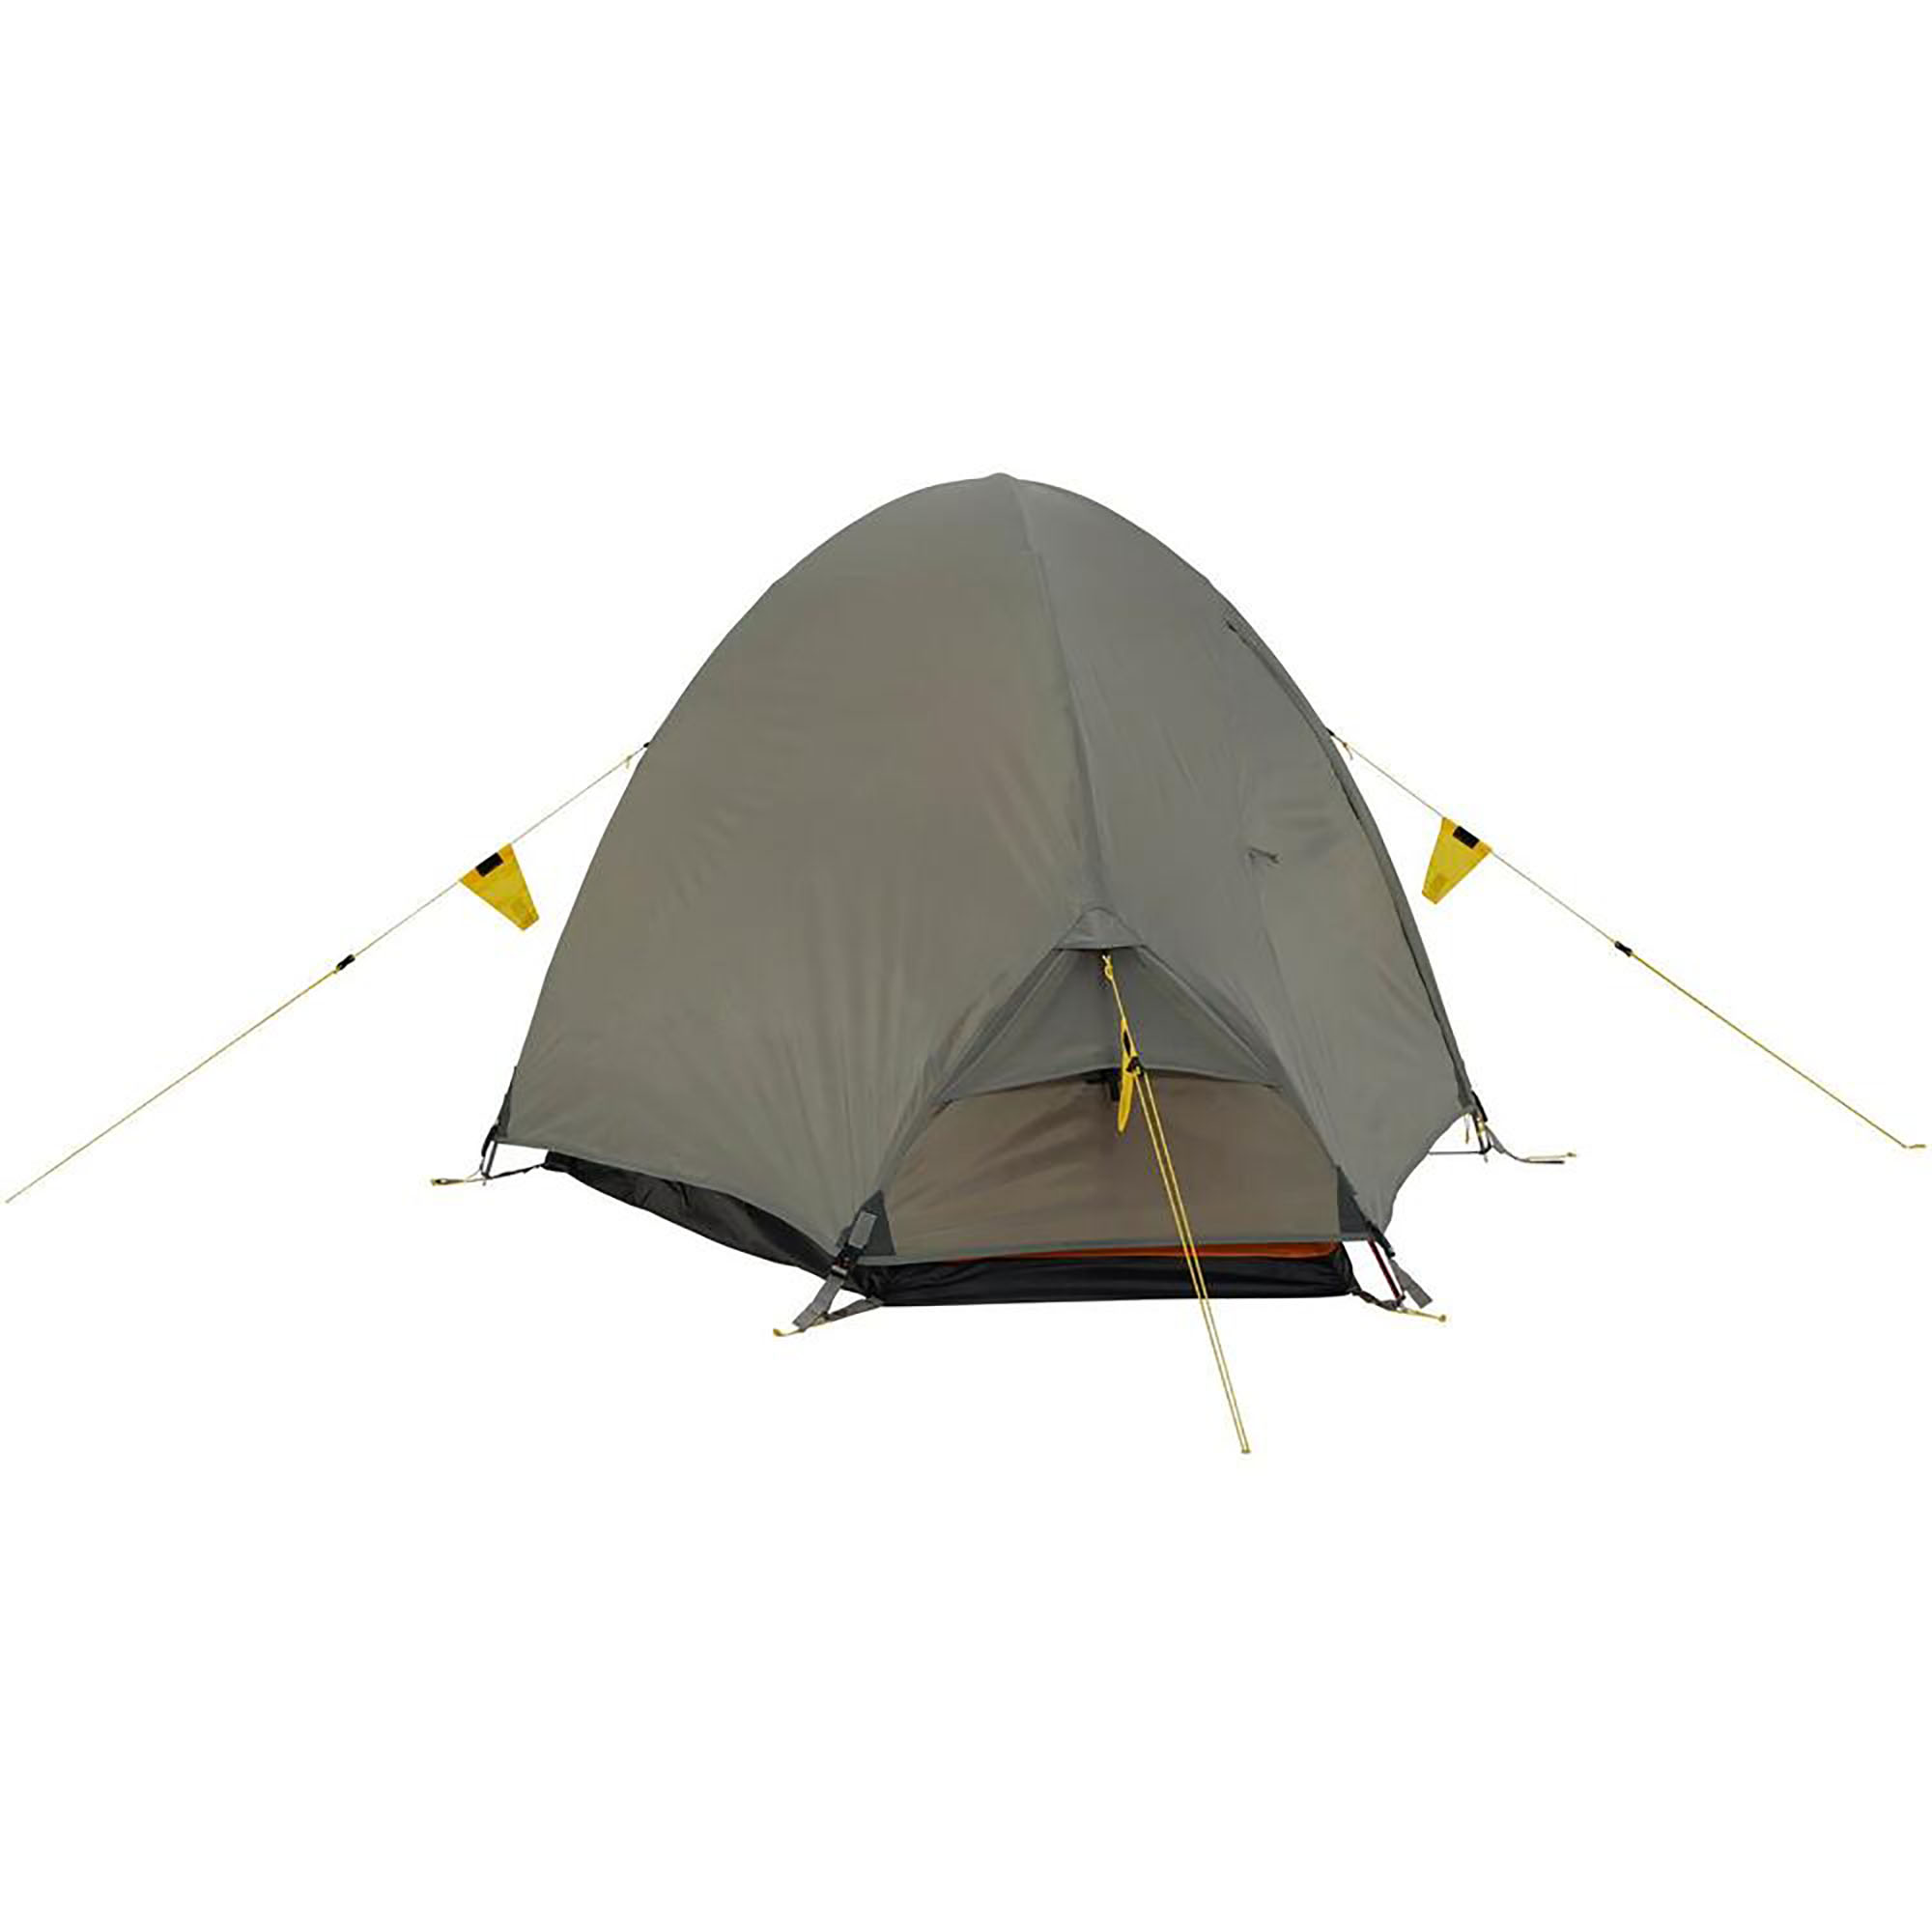 Wechsel Venture 1 Lightweight Hiking Tent